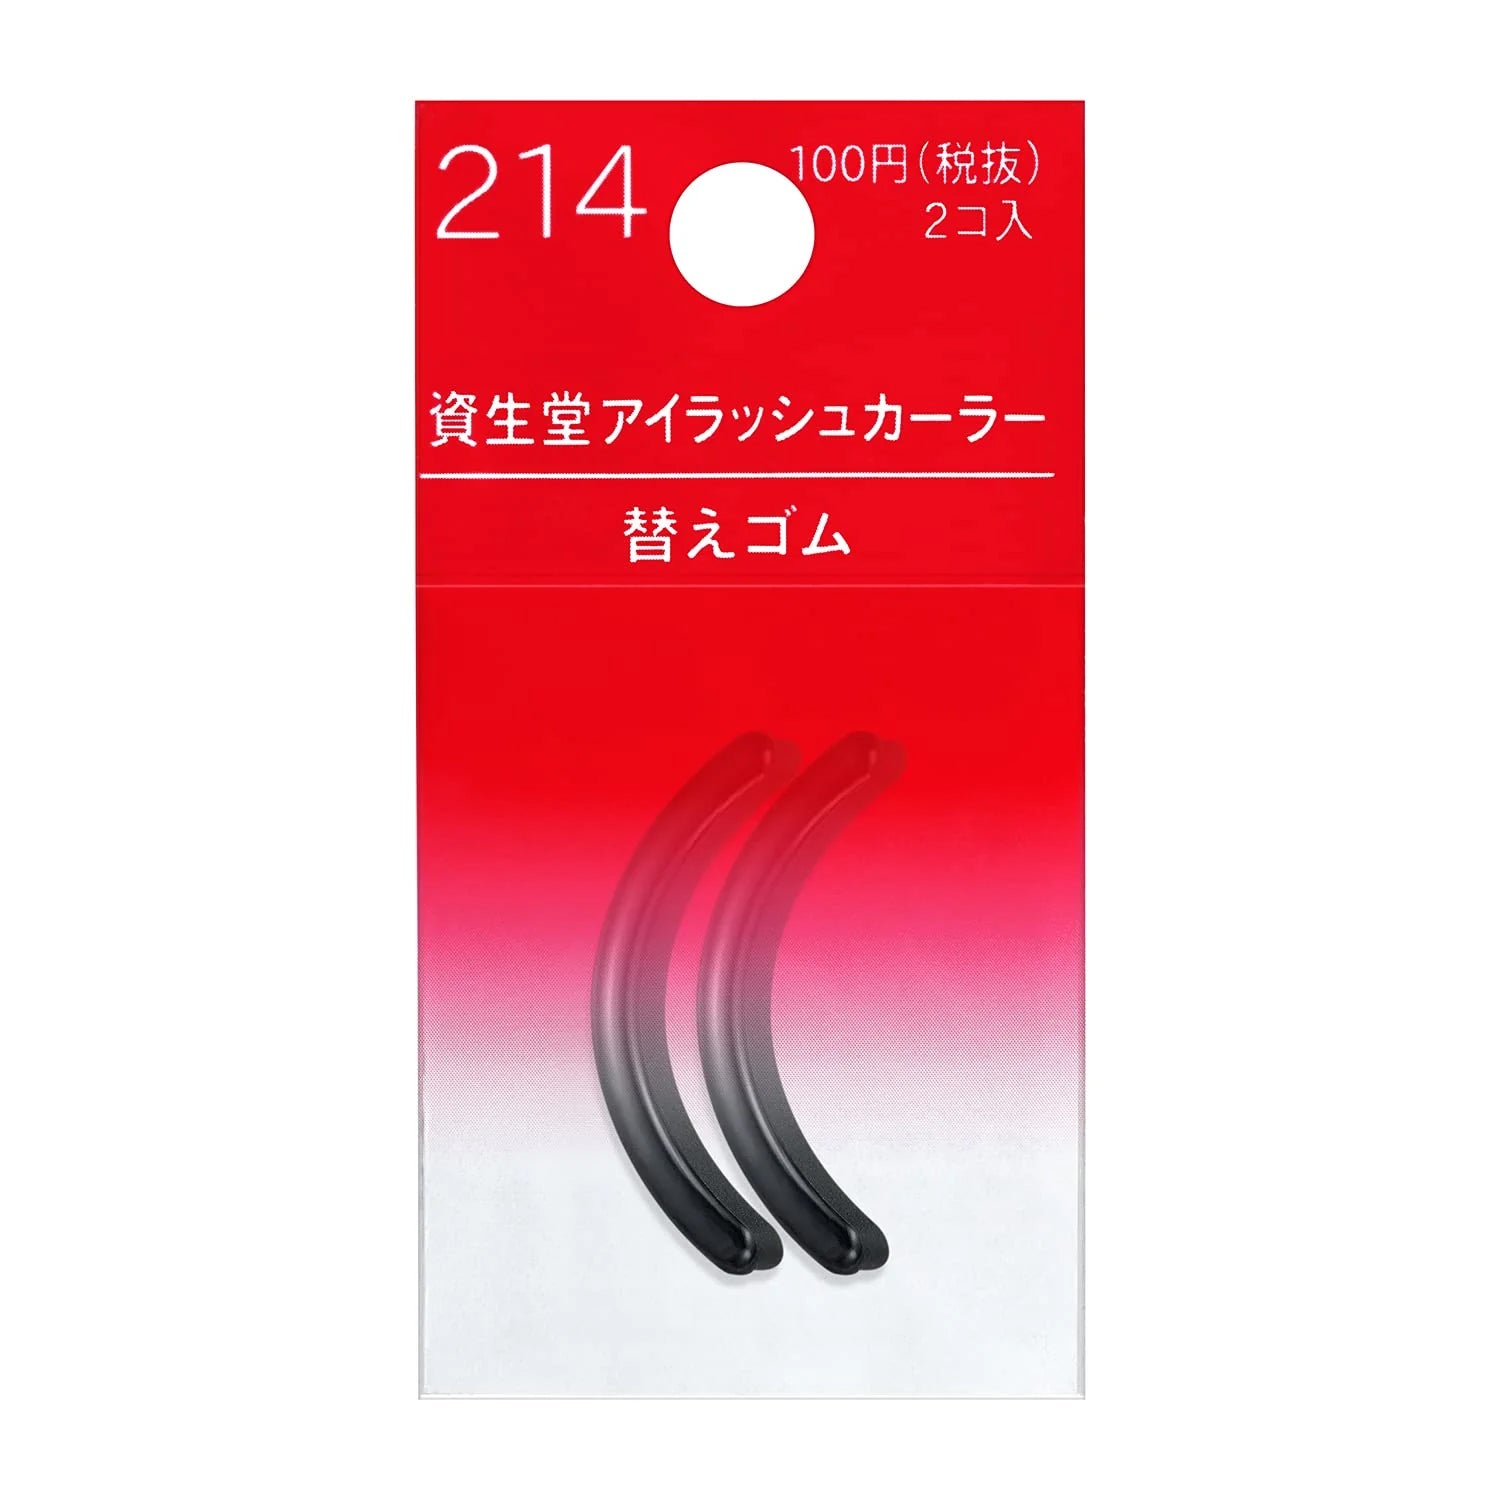 Shiseido Eyelash Curler 214 Rubber Refill Beauty Shiseido   